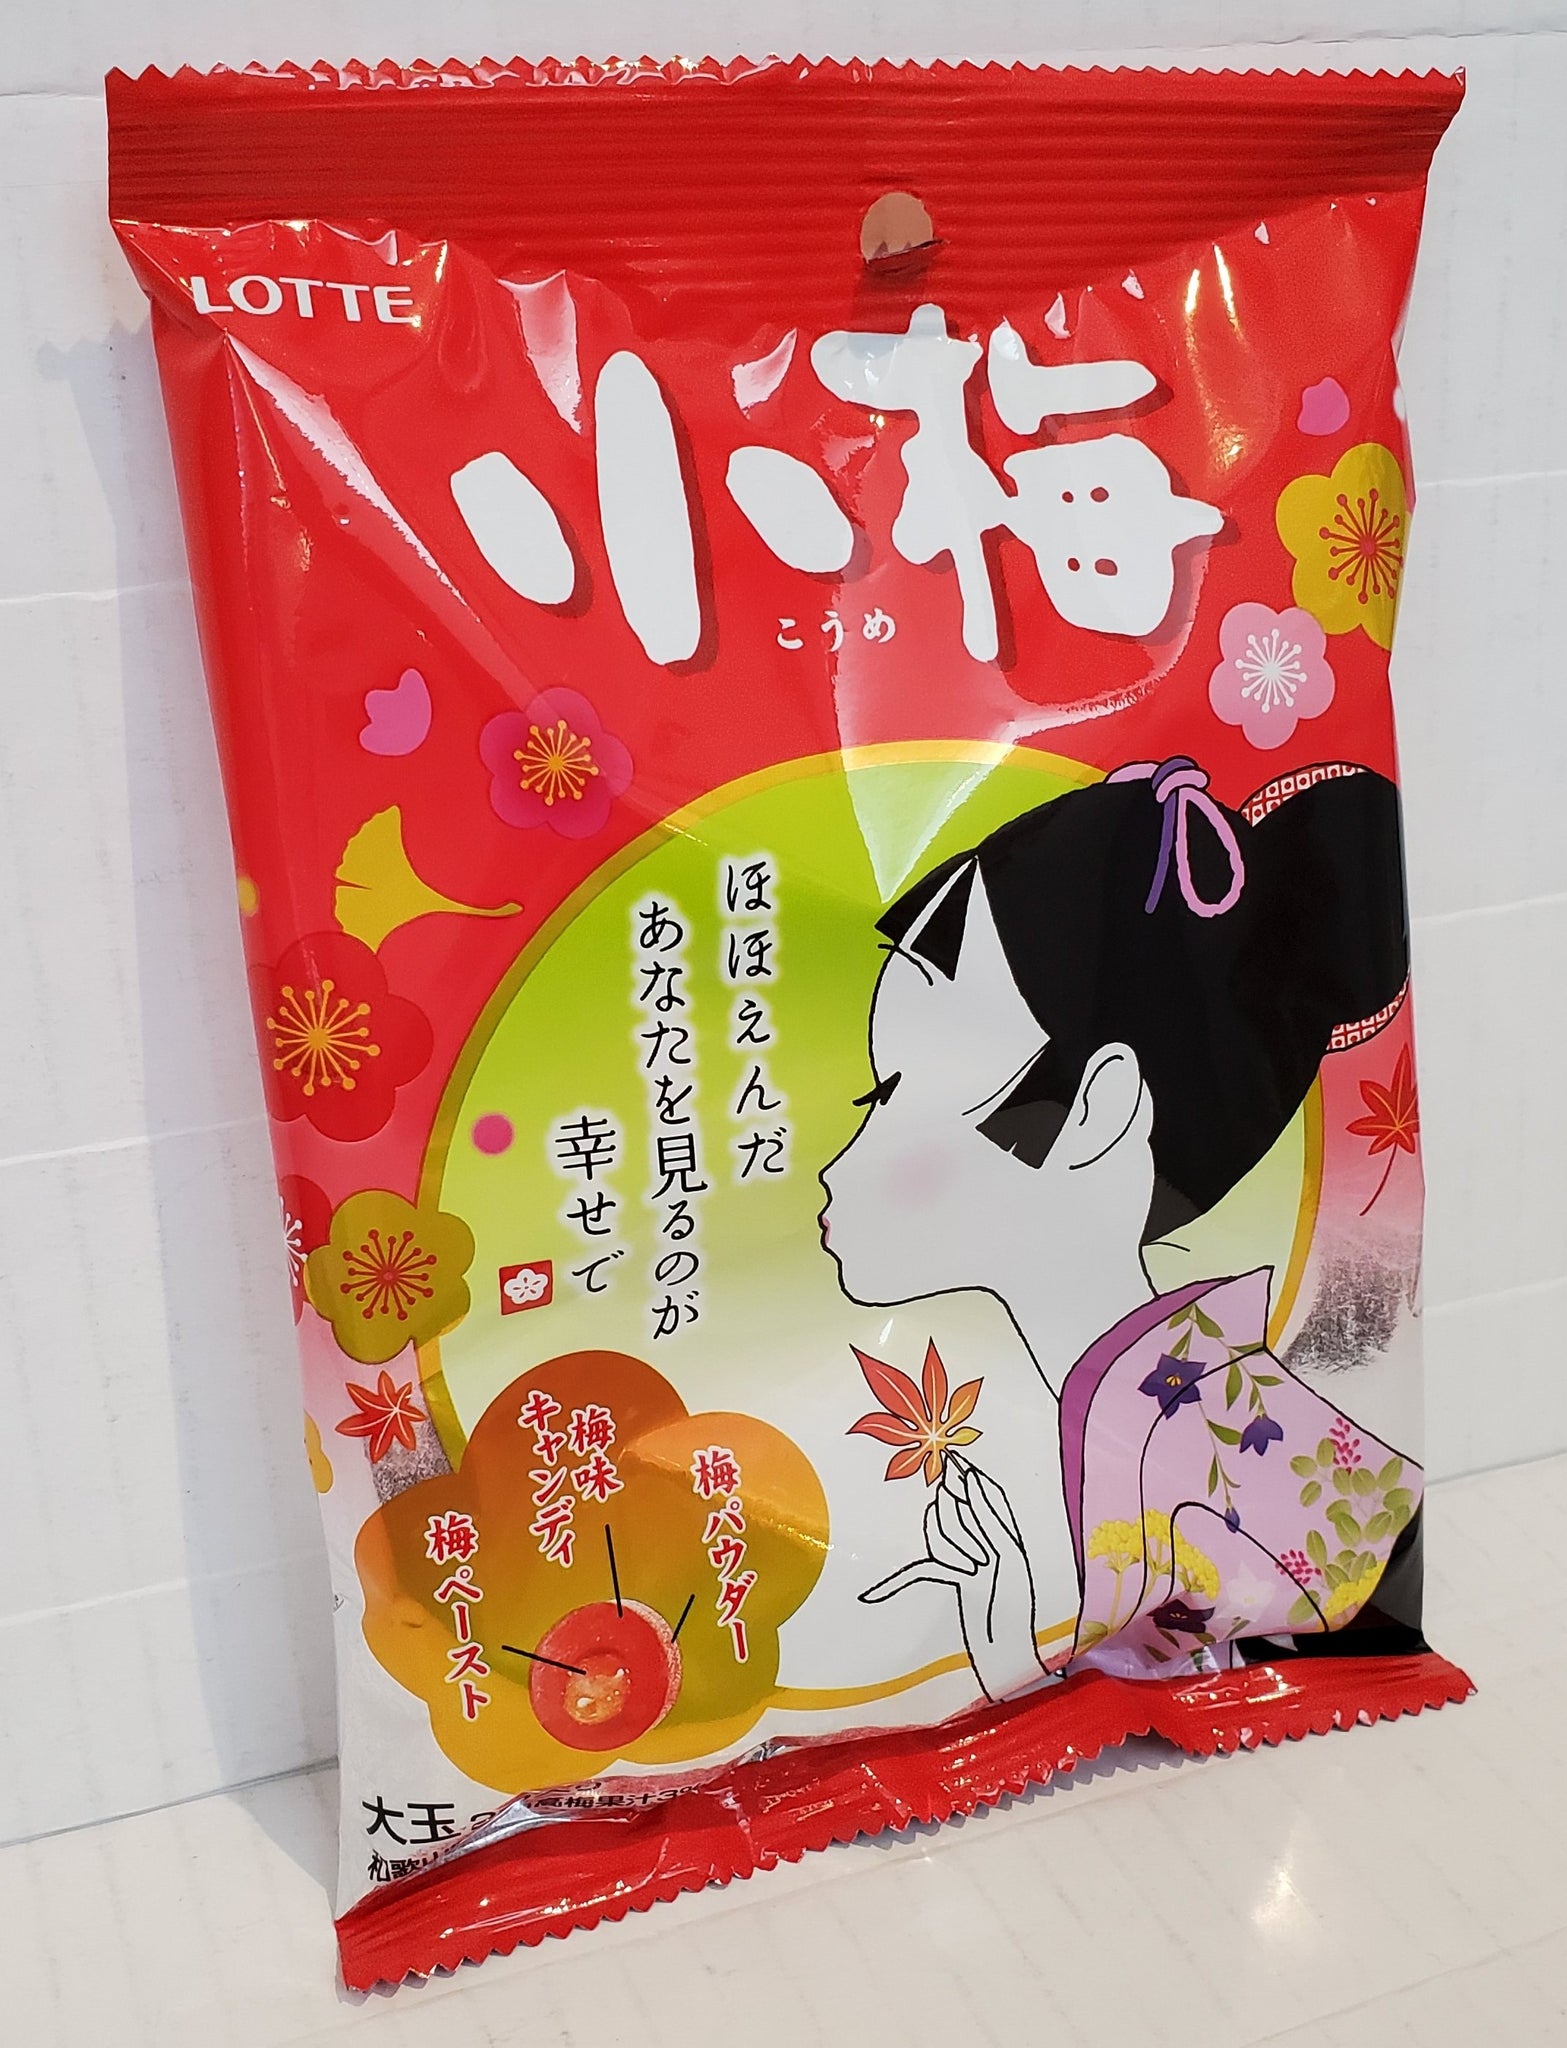 Lotte koume plum candy 樂天小梅梅子糖